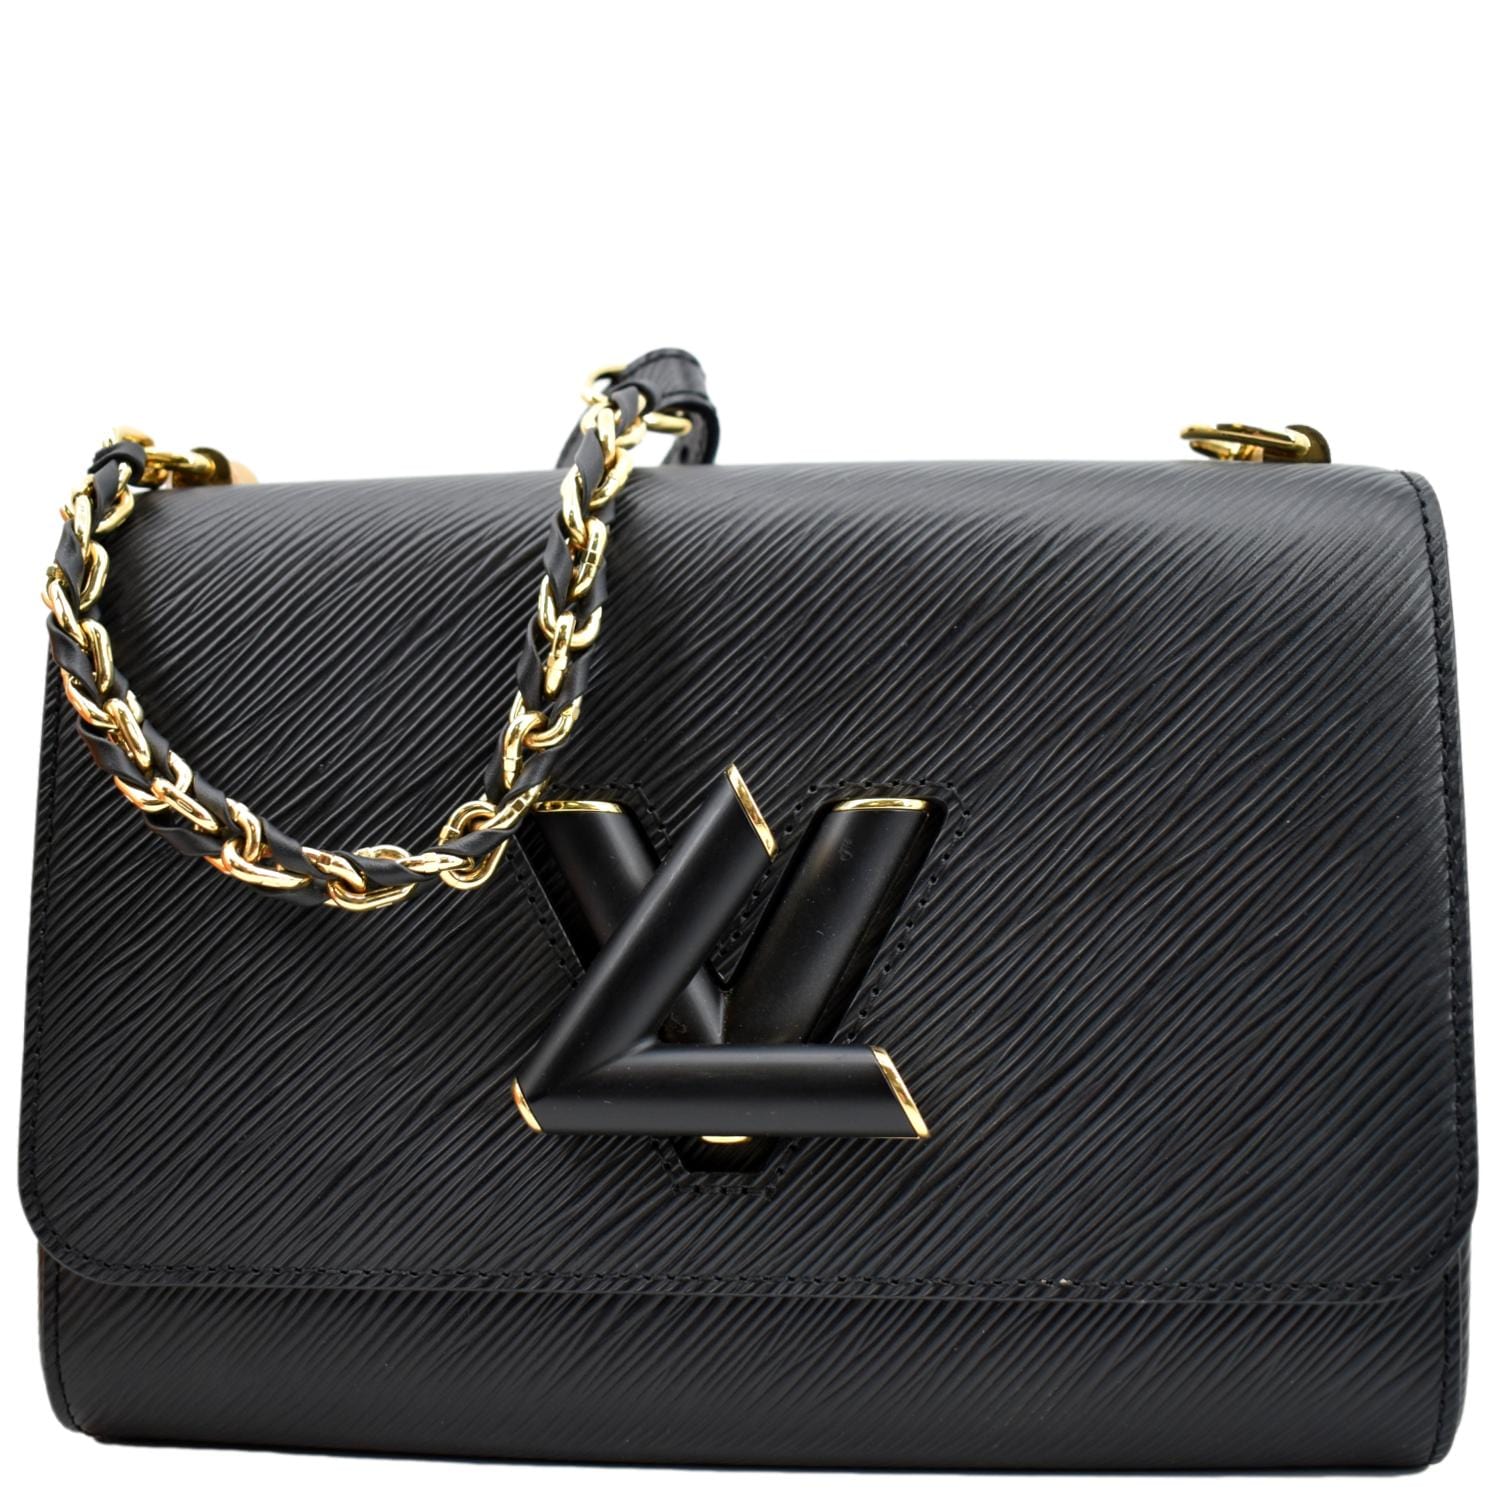 Twist MM Epi Leather - Handbags